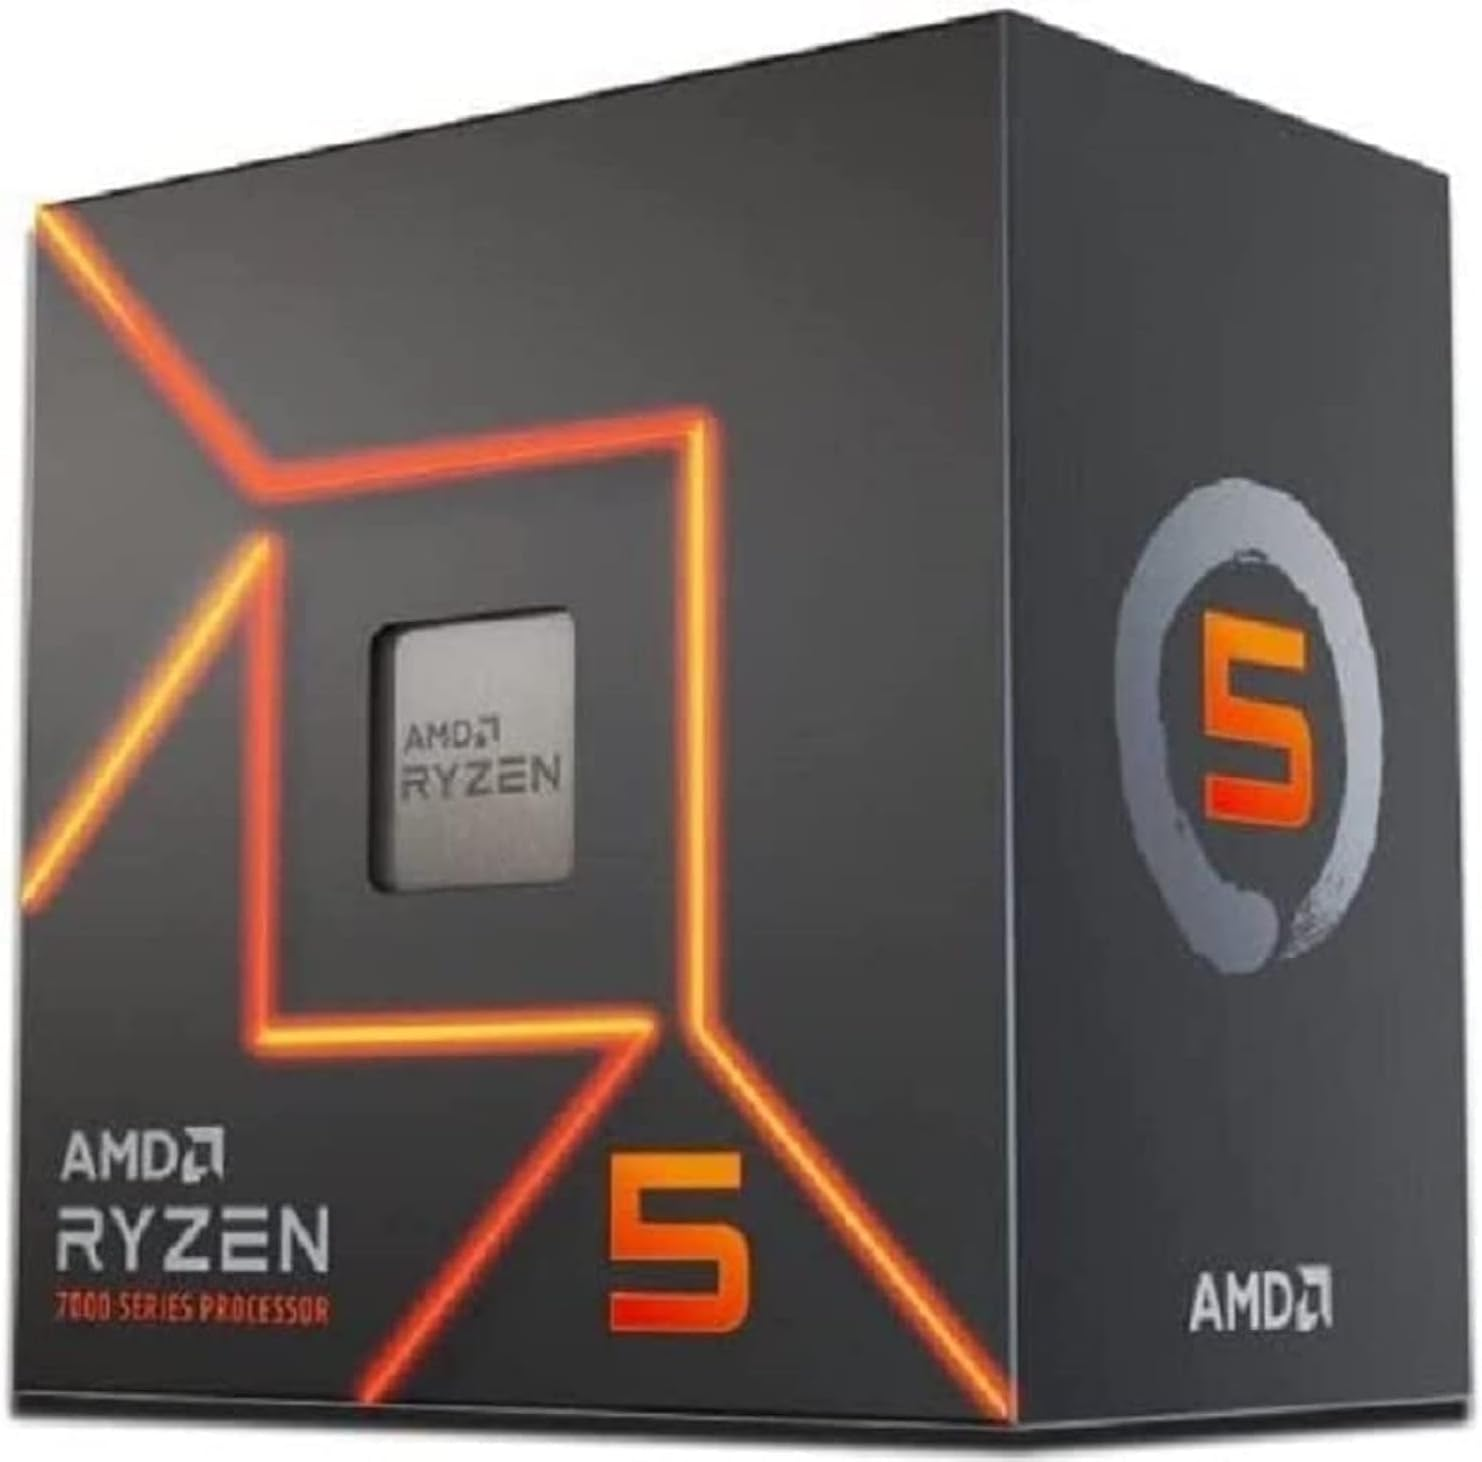 AMD Ryzen 5 7600 CPU $129 at Amazon $129